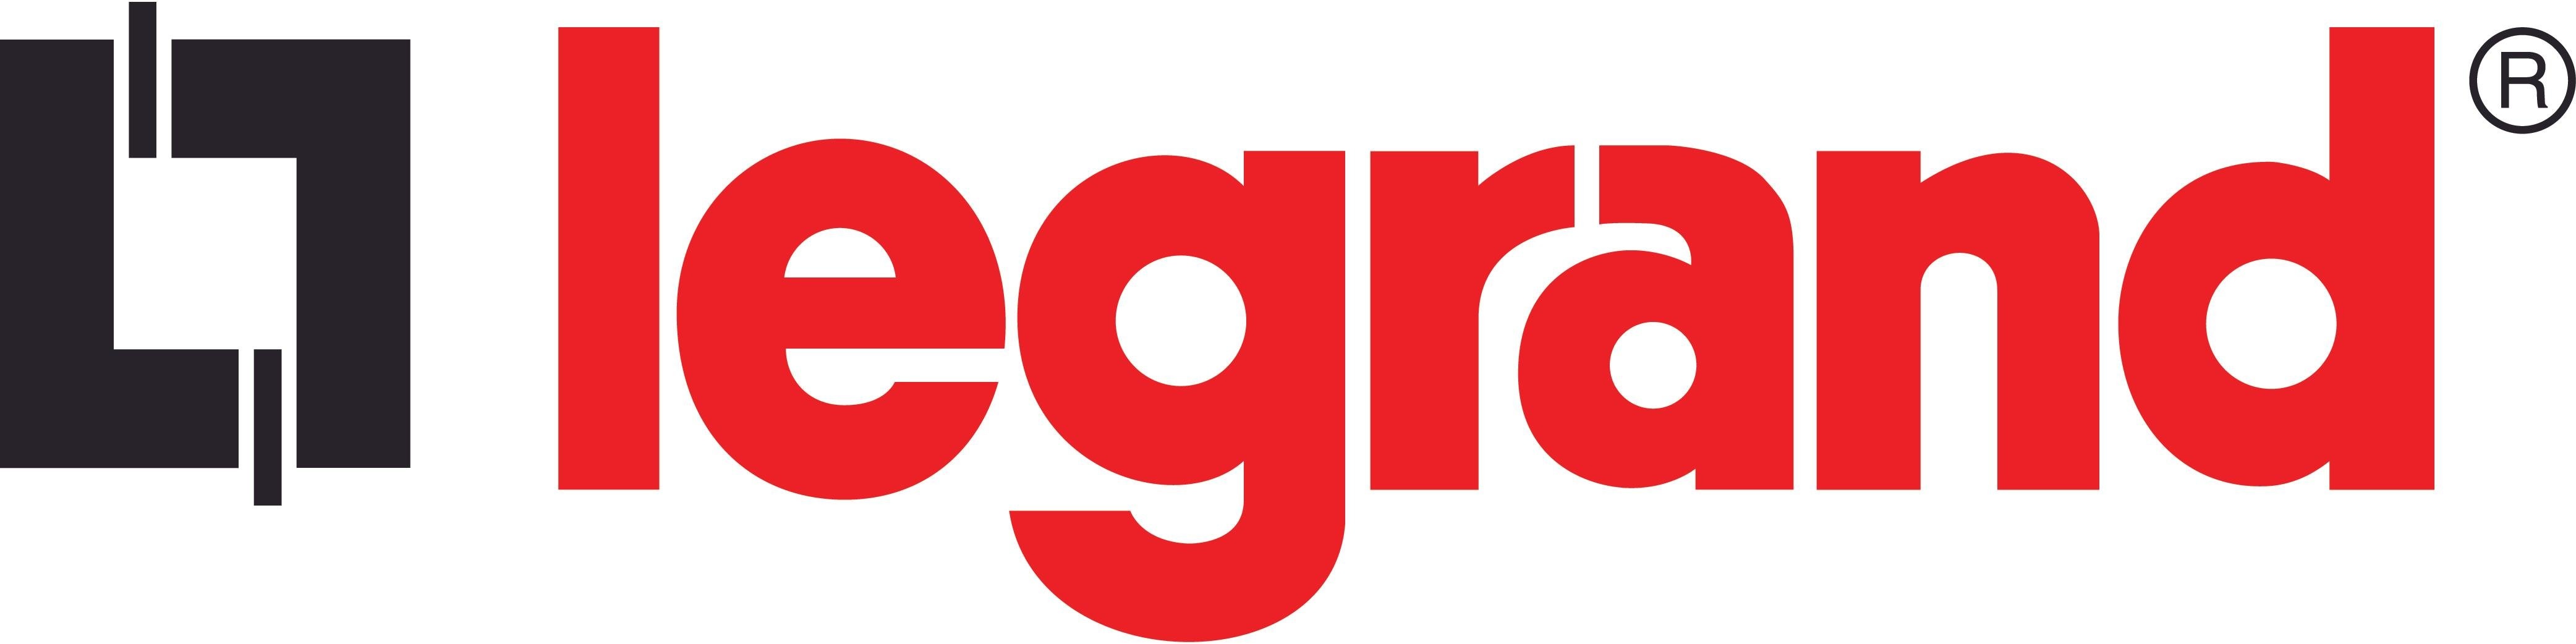 Легран логотип